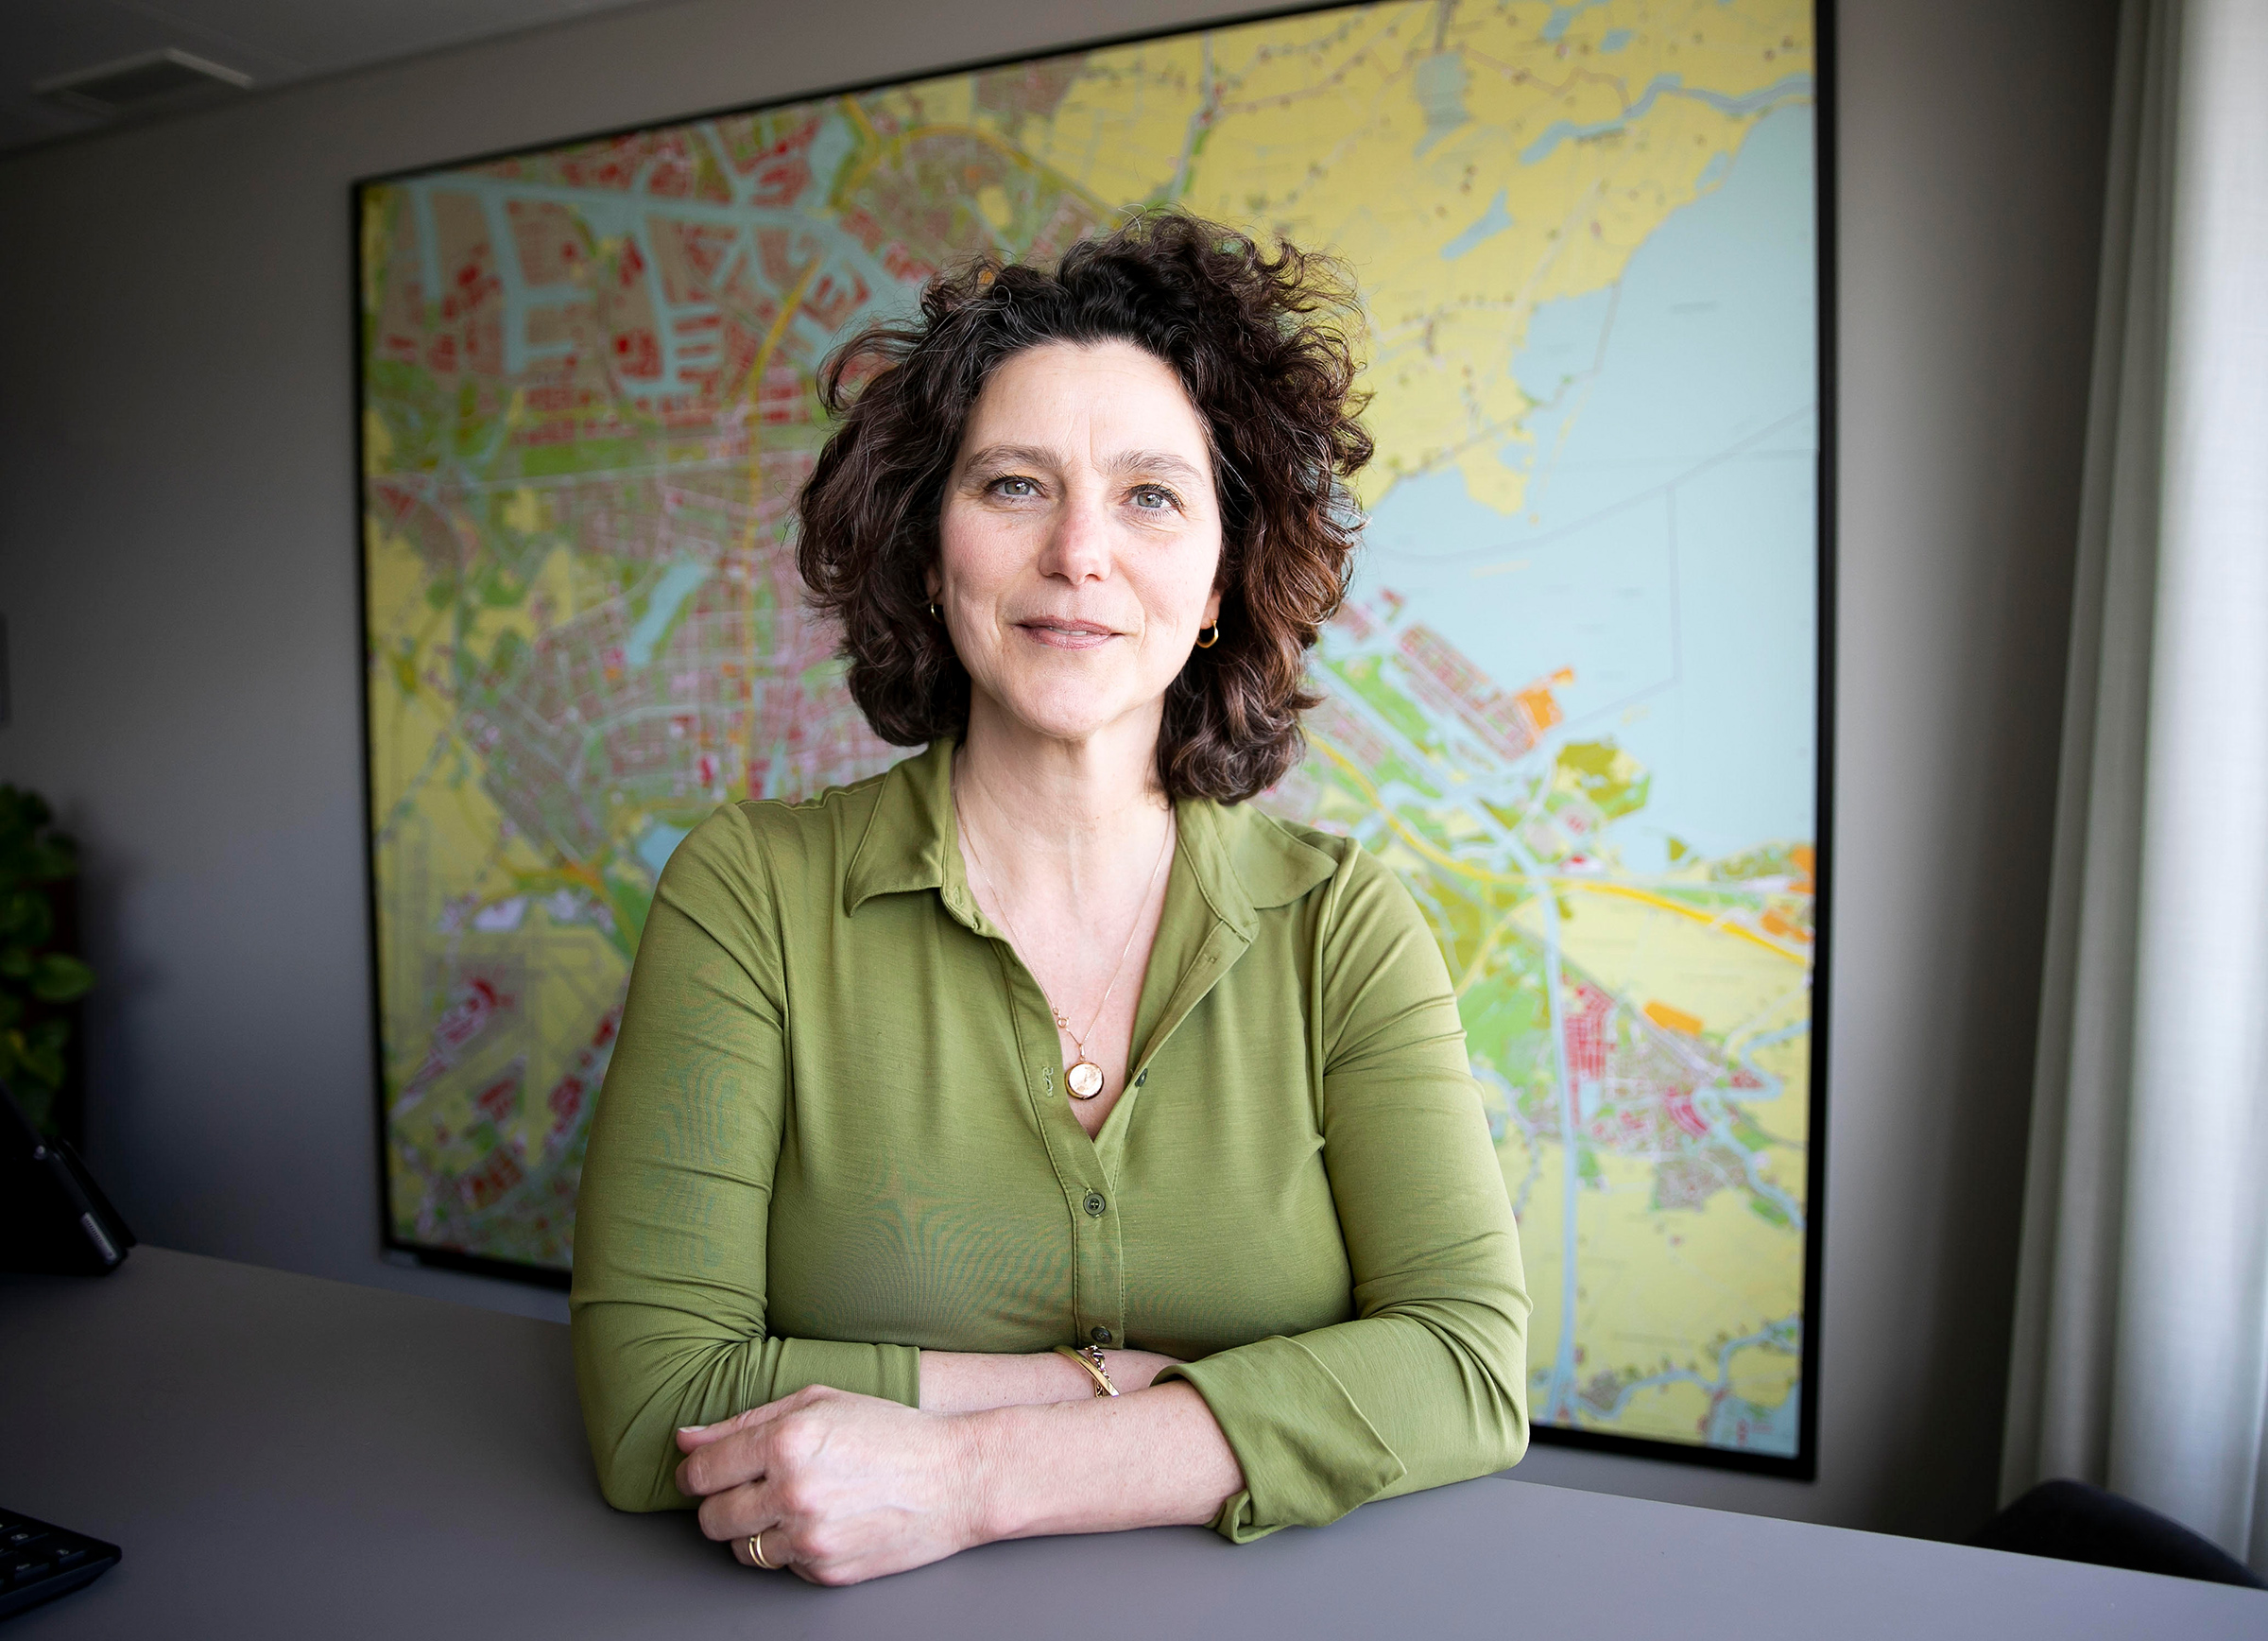 Marieke van Doorninck, deputy mayor for sustainability, is trying to make Amsterdam a “doughnut city”